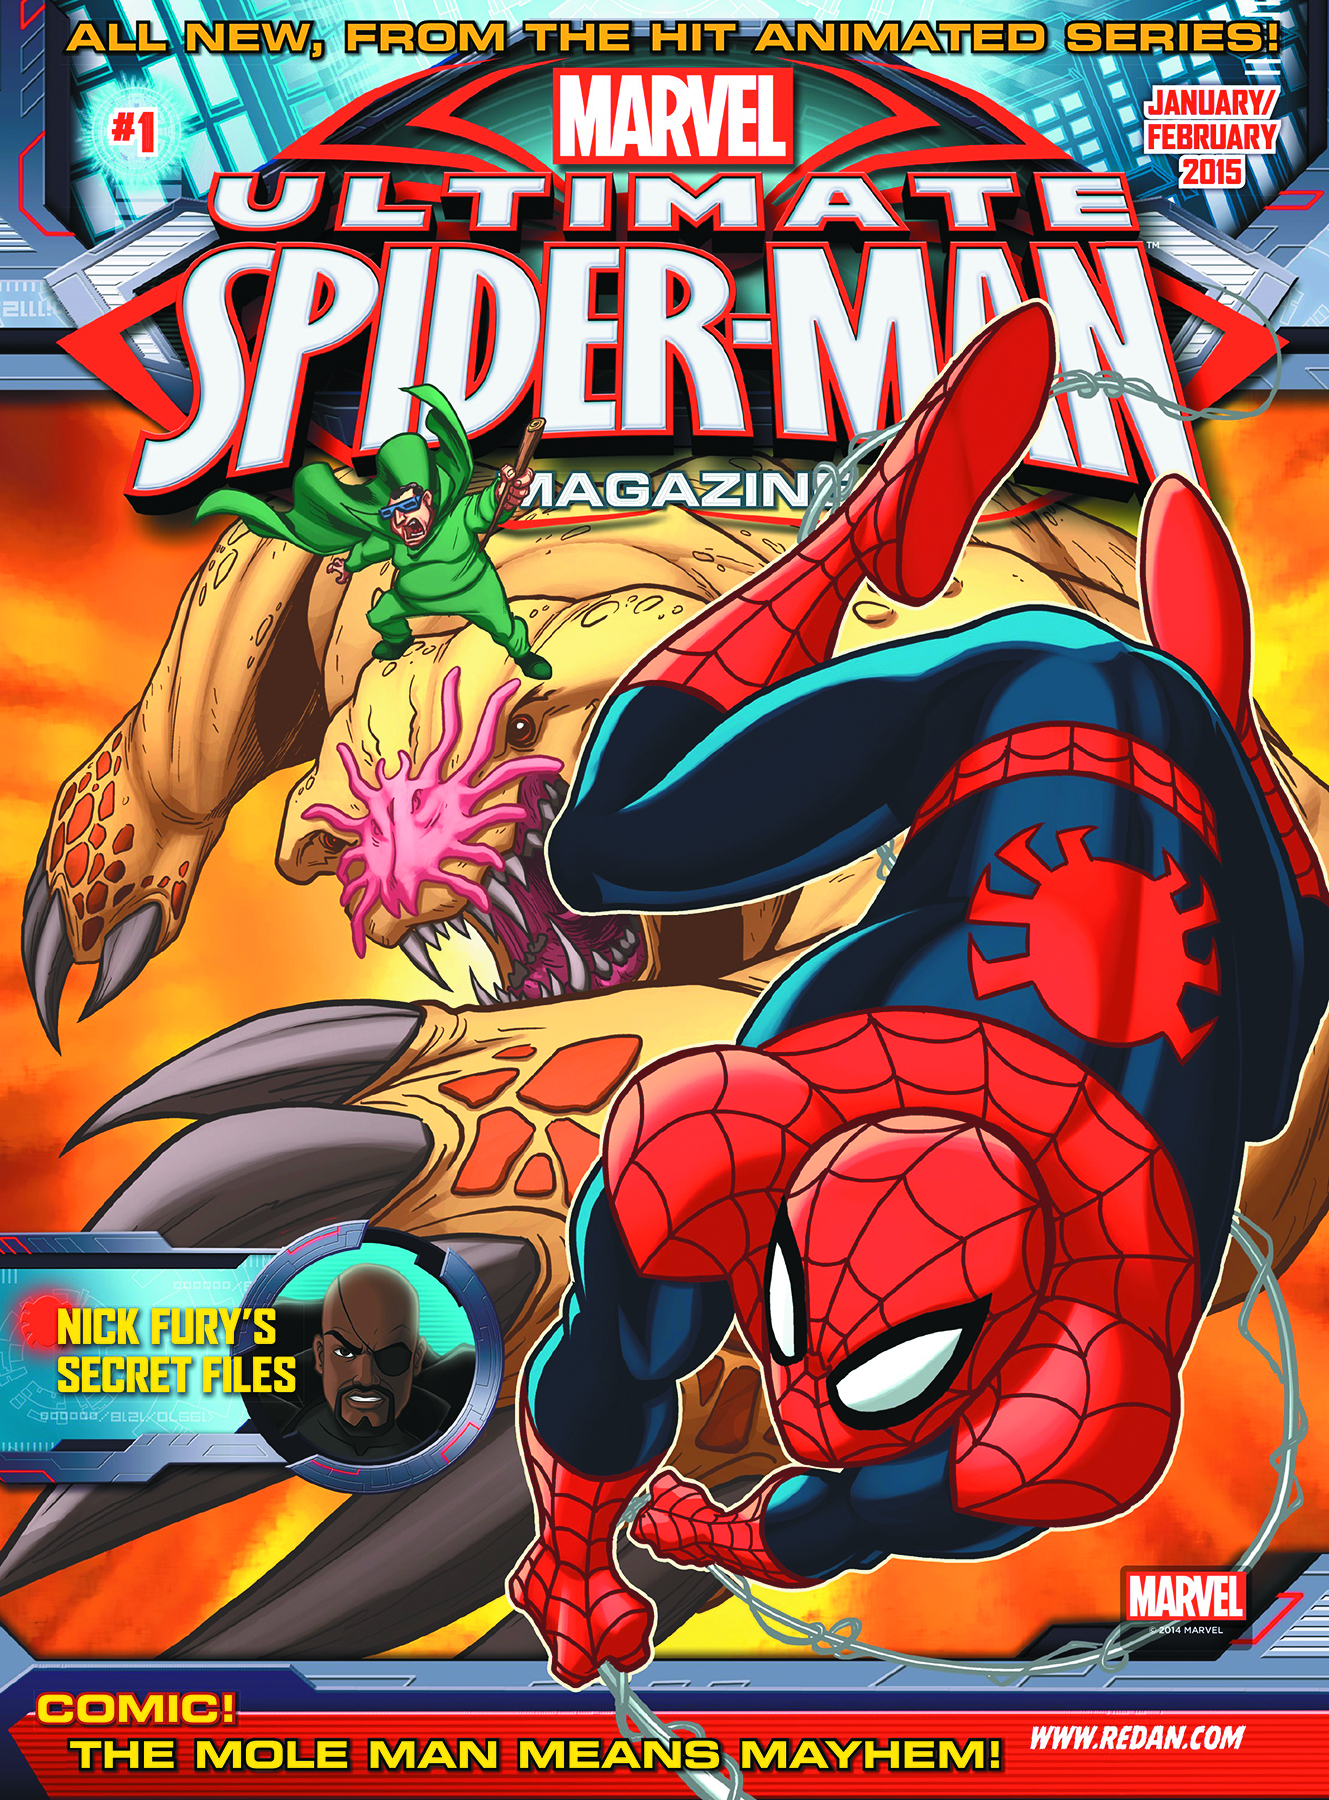 OCT141888 - ULTIMATE SPIDER-MAN MAGAZINE #1 - Previews World